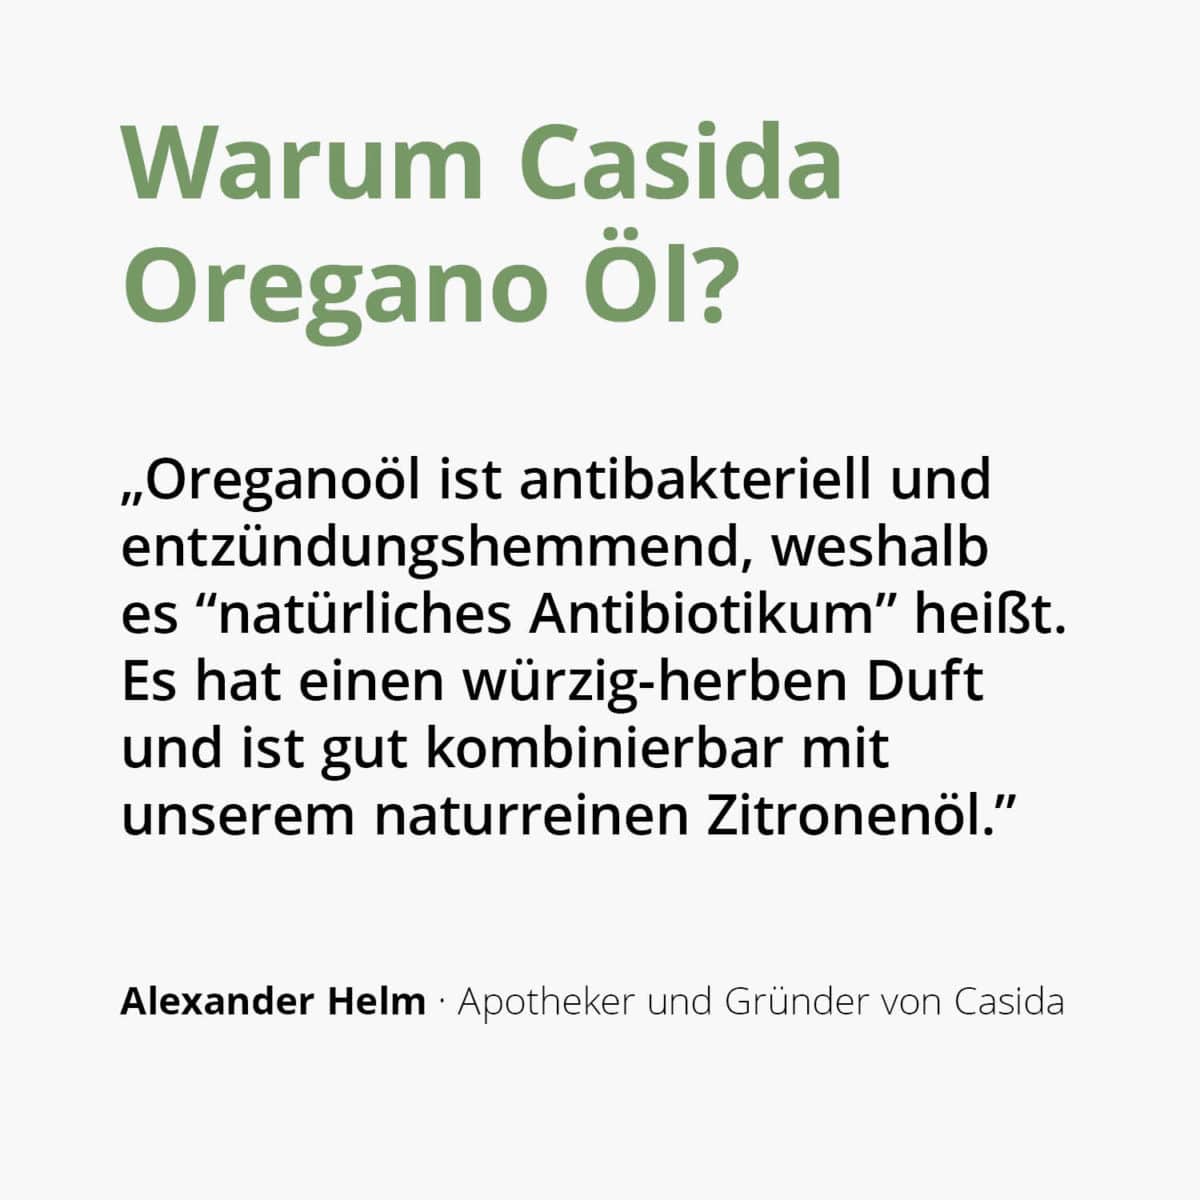 Casida Oregano Oil Origanum vulgare naturrein – 10 ml 16486789 PZN Apotheke ätherische Öle Diffuser Pflanzliches Antibiotika antiviral2